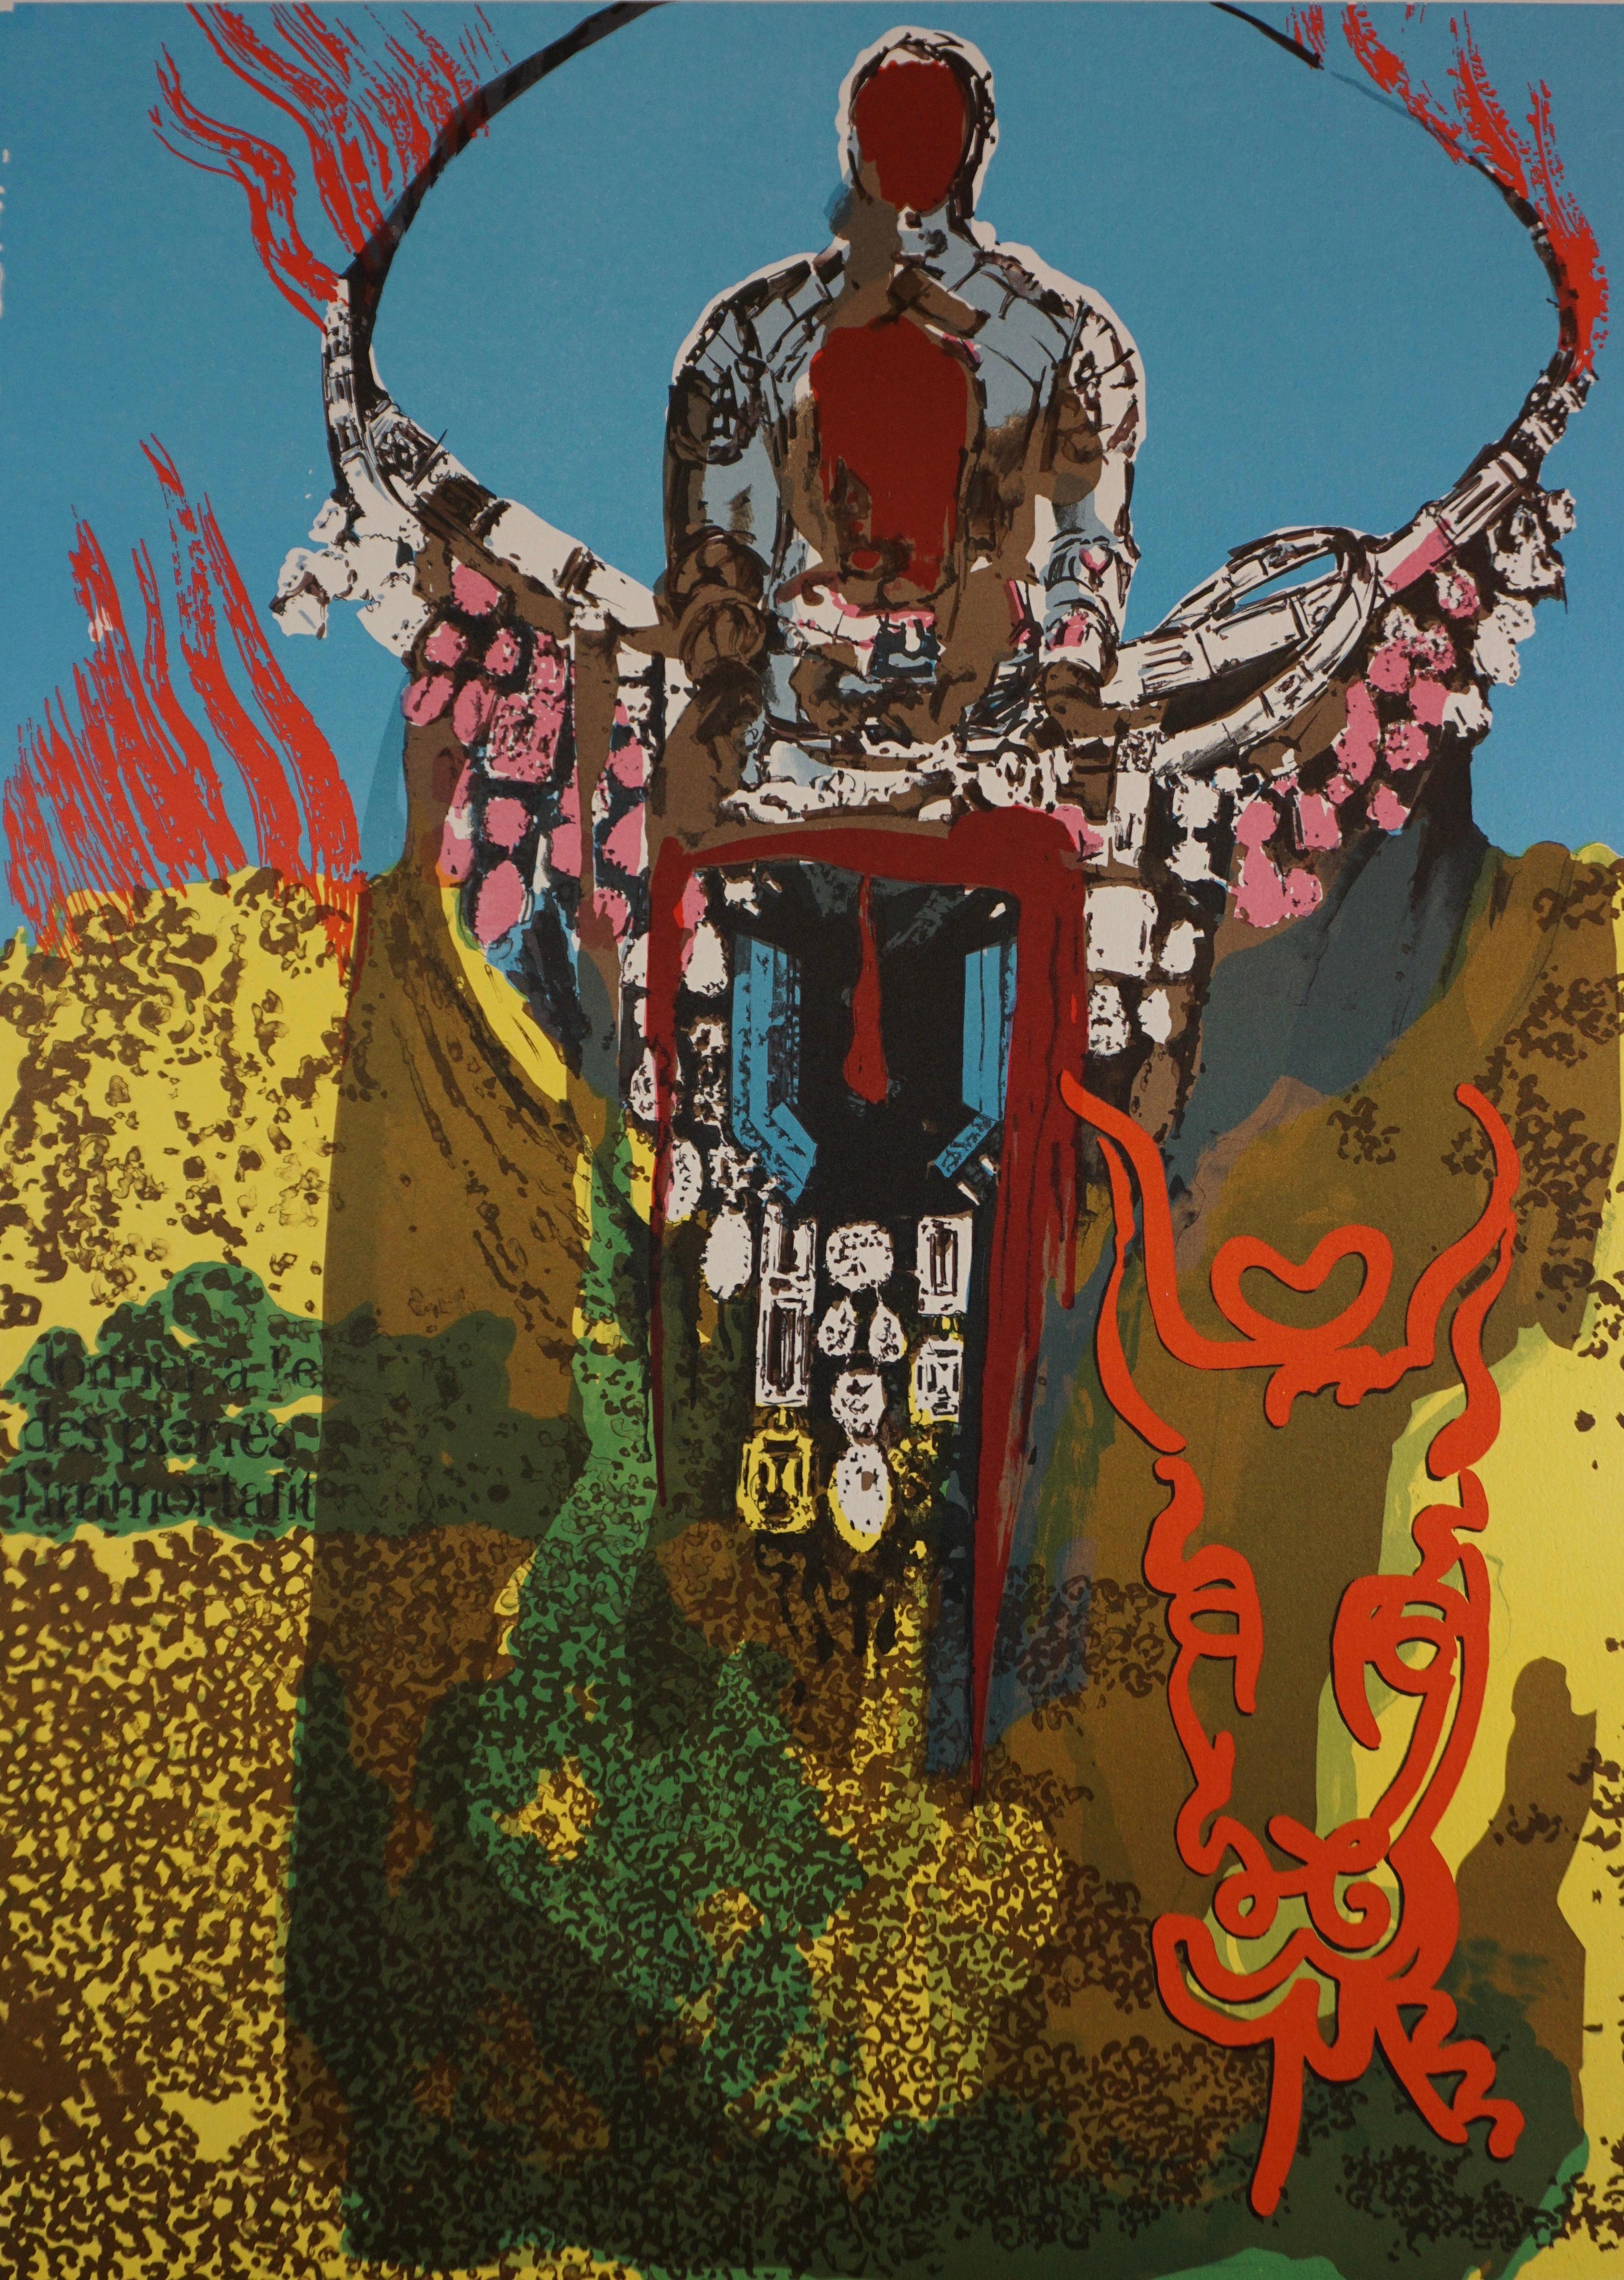 The Bullfighter (Golden Calf)  - Print by Salvador Dalí